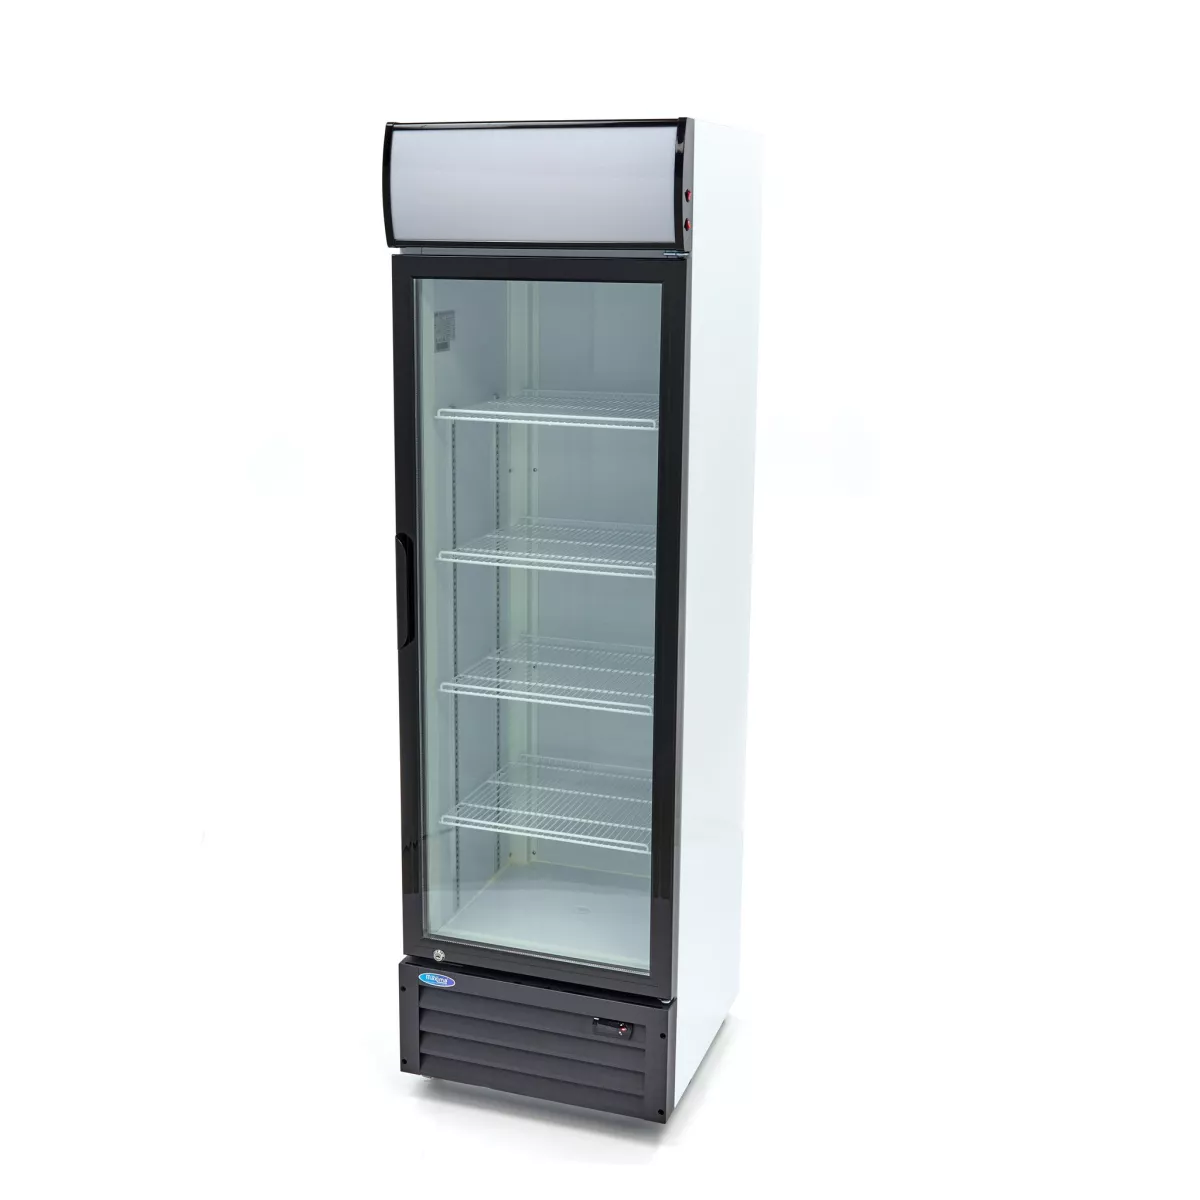 #2 - Displaykøleskab / Flaskekøleskab - 360 liter